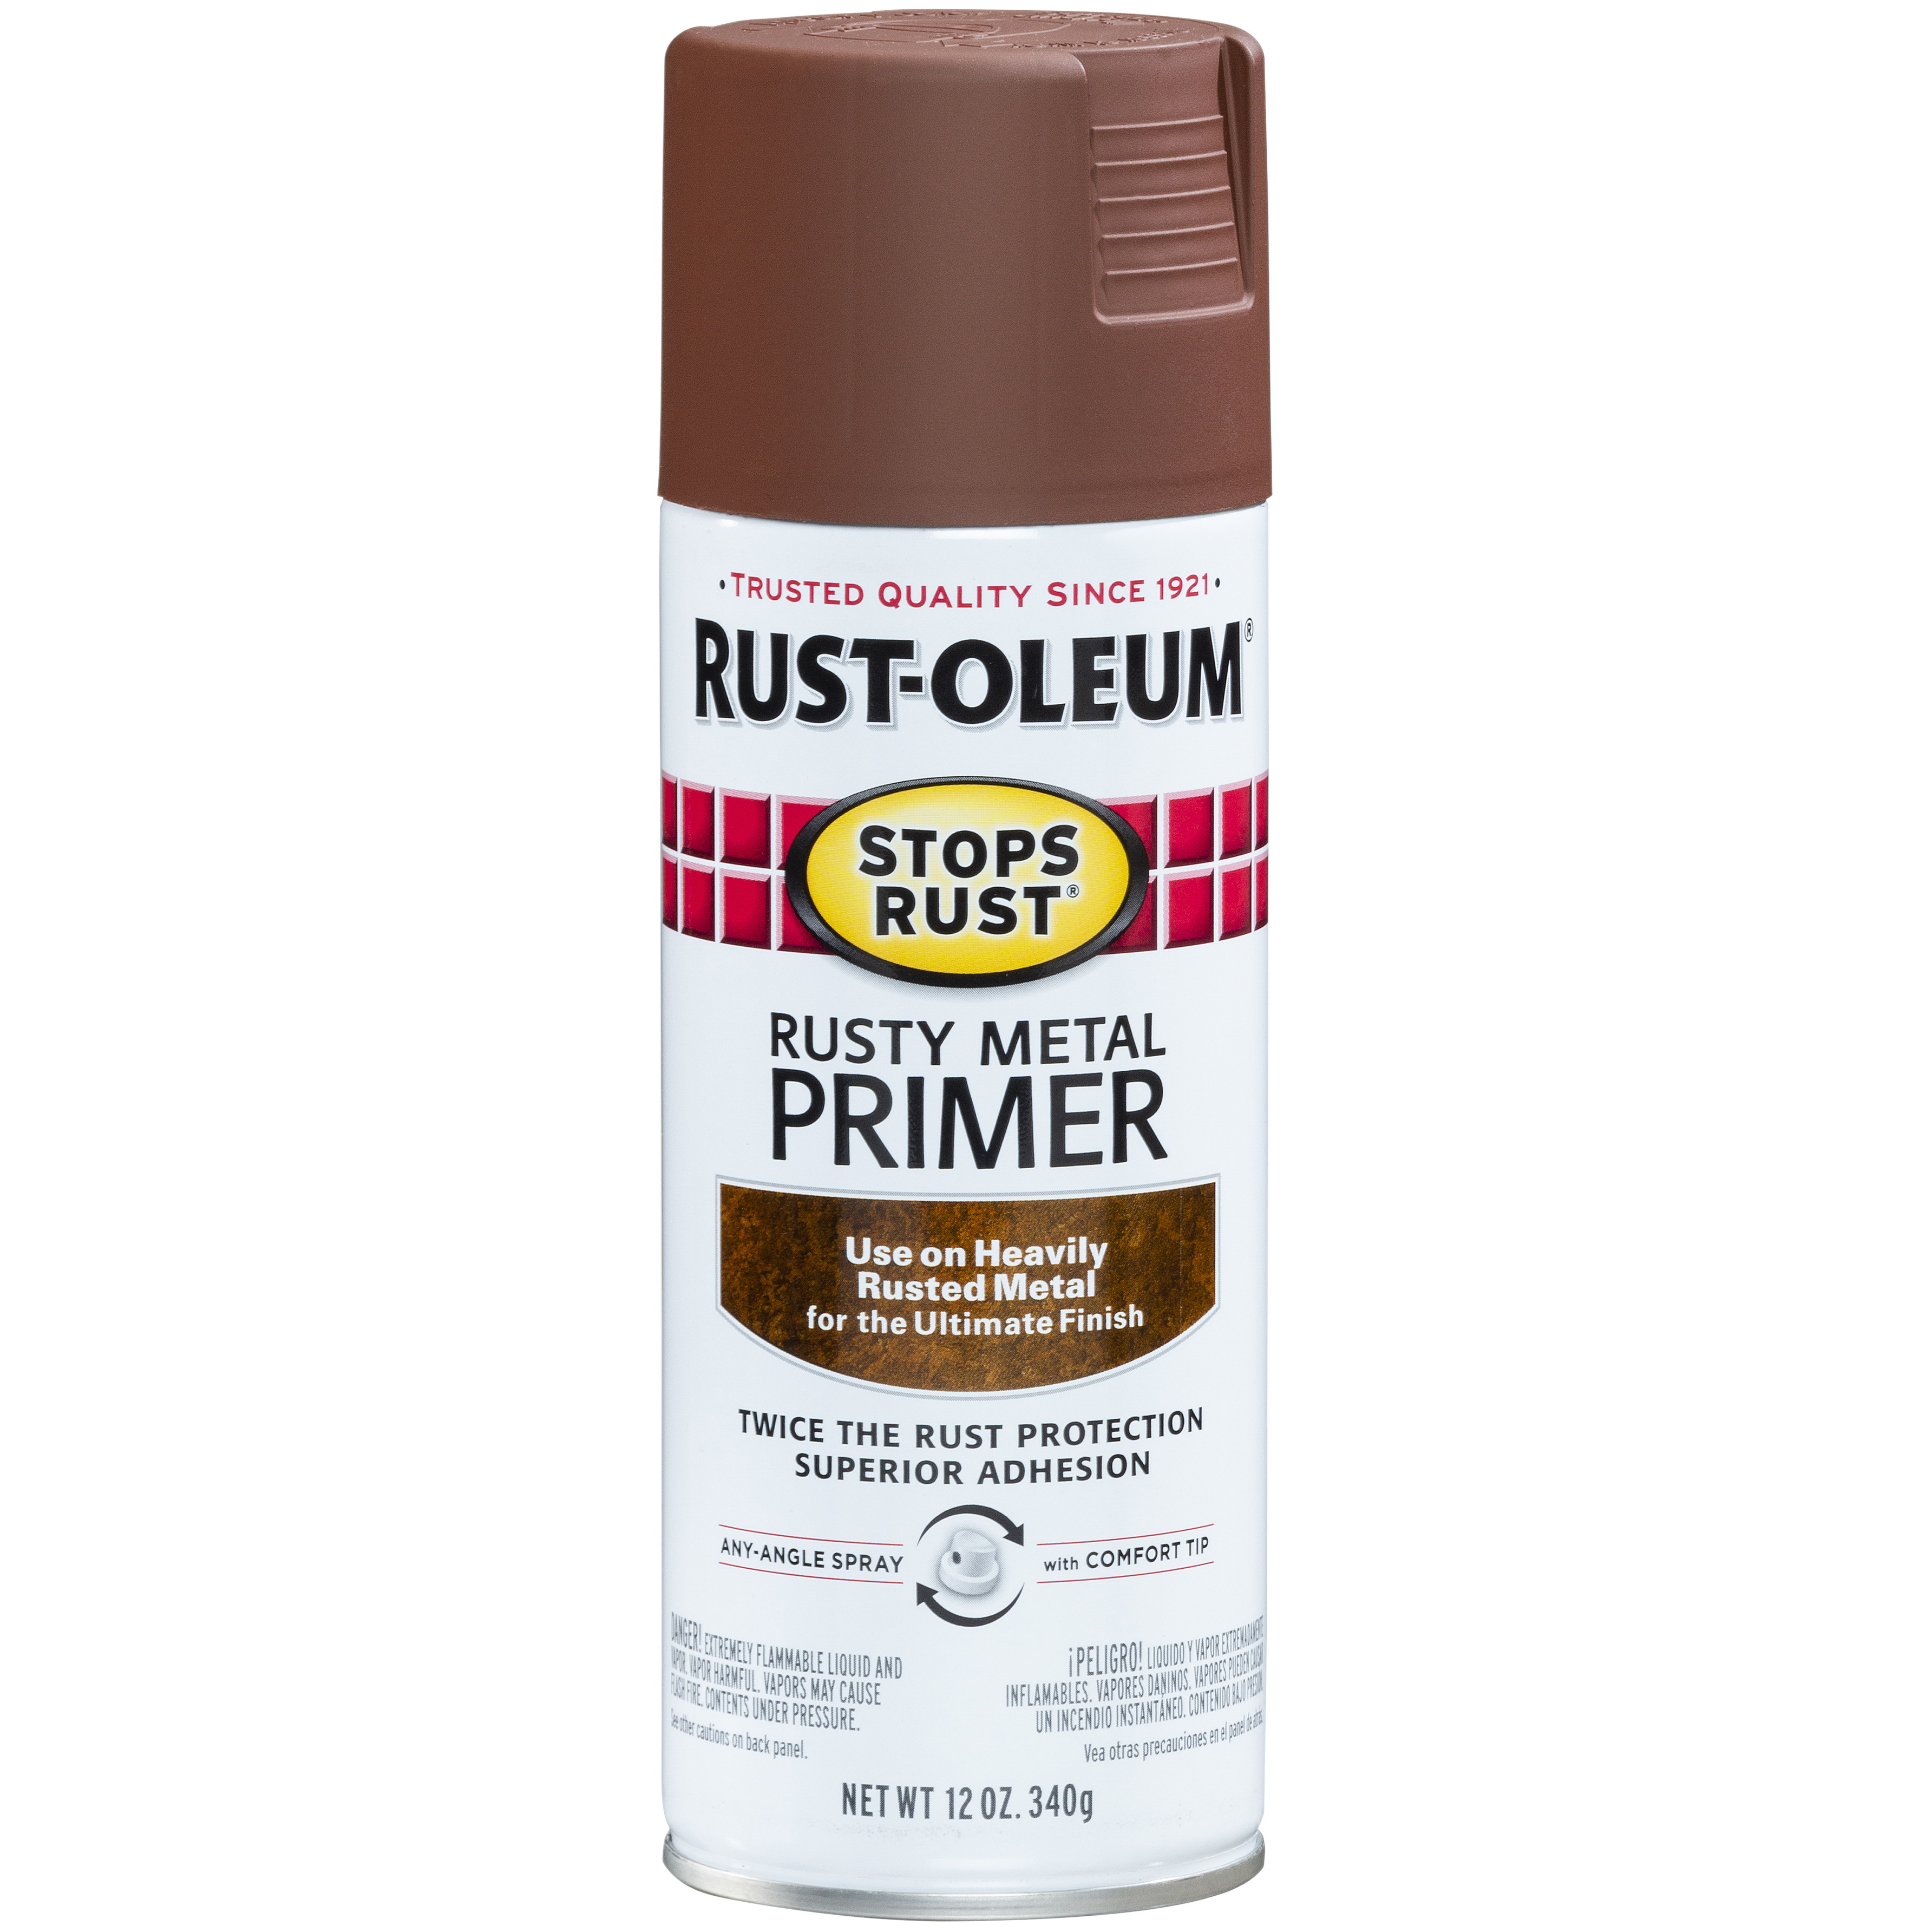 Buy Rust-Oleum Stops Rust 353346 Primer with Turbo Spray System